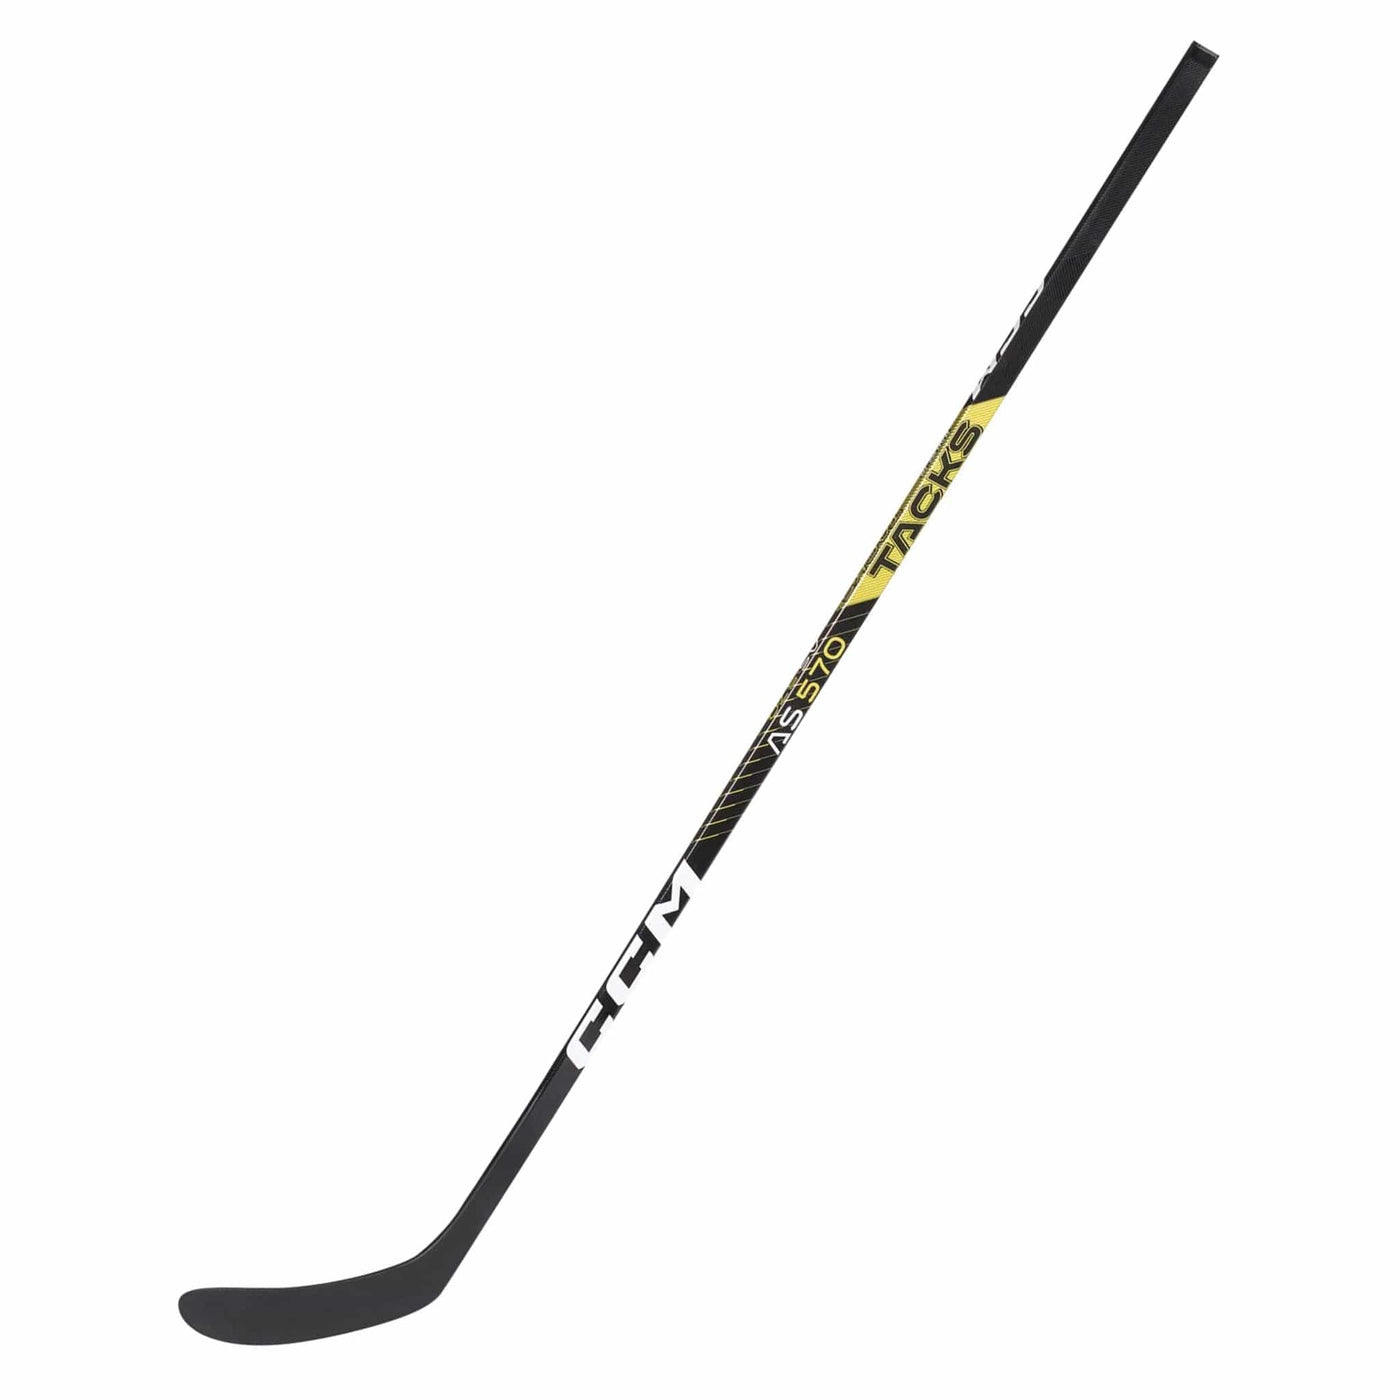 CCM Super Tacks AS570 Senior Hockey Stick - The Hockey Shop Source For Sports